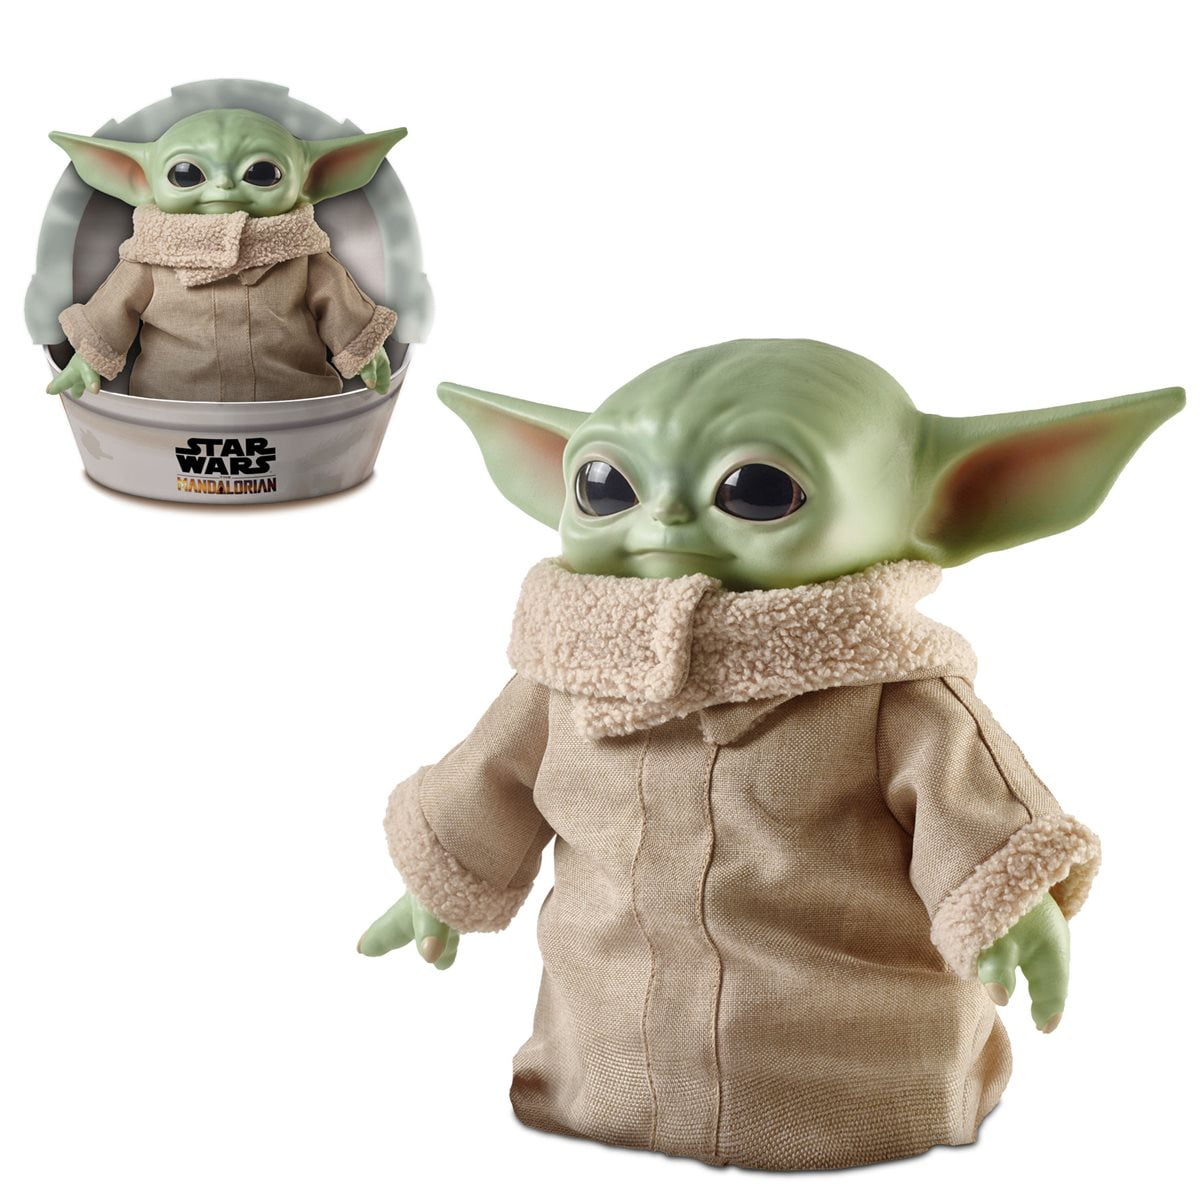 Star Wars Baby Yoda The Child 11 inch Plush Toy GWD85 